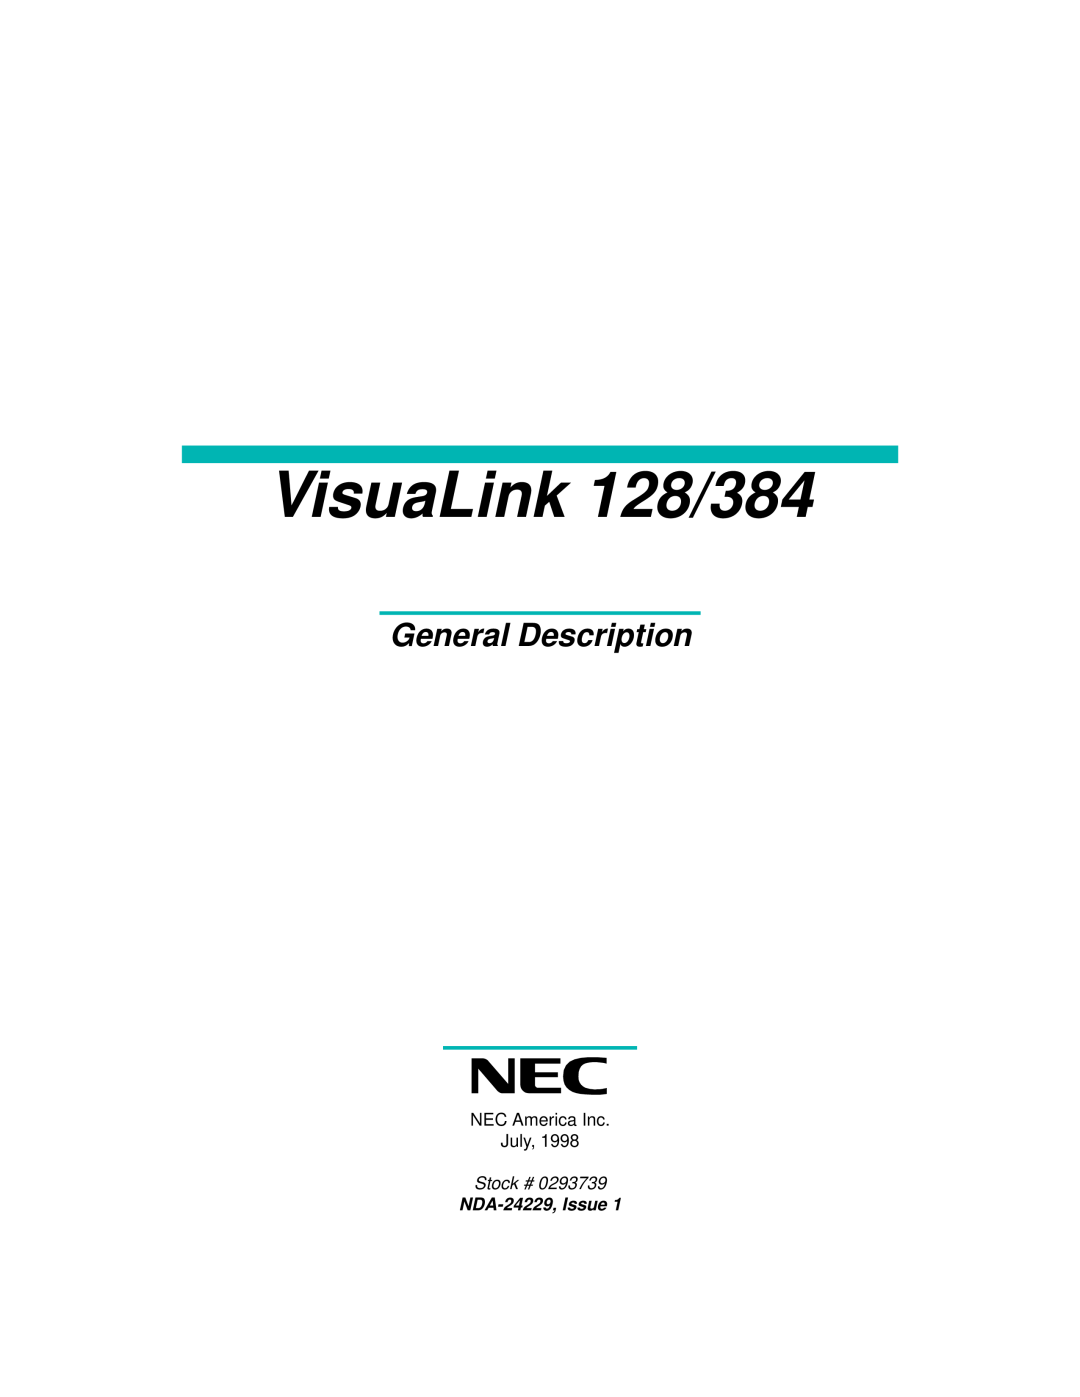 NEC manual VisuaLink 128/384, General Description, NDA-24229,Issue 